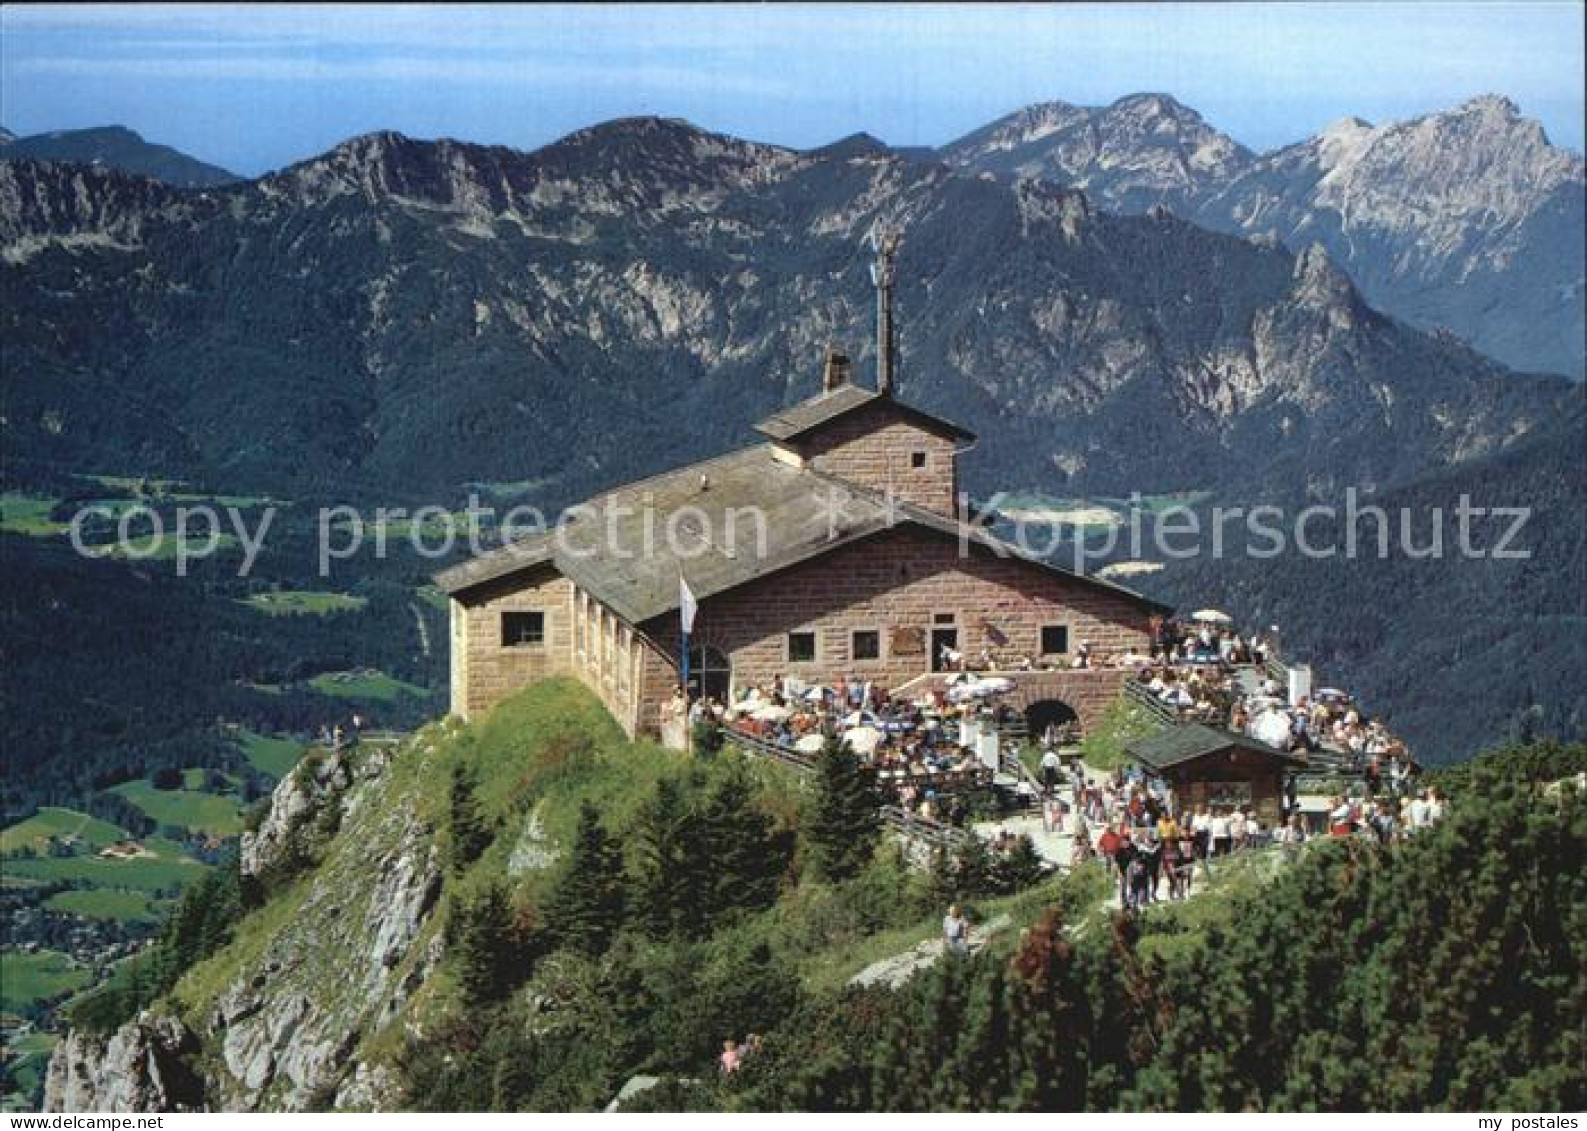 72583846 Kehlsteinhaus Fliegeraufnahme Bergrestaurant Berchtesgaden - Berchtesgaden